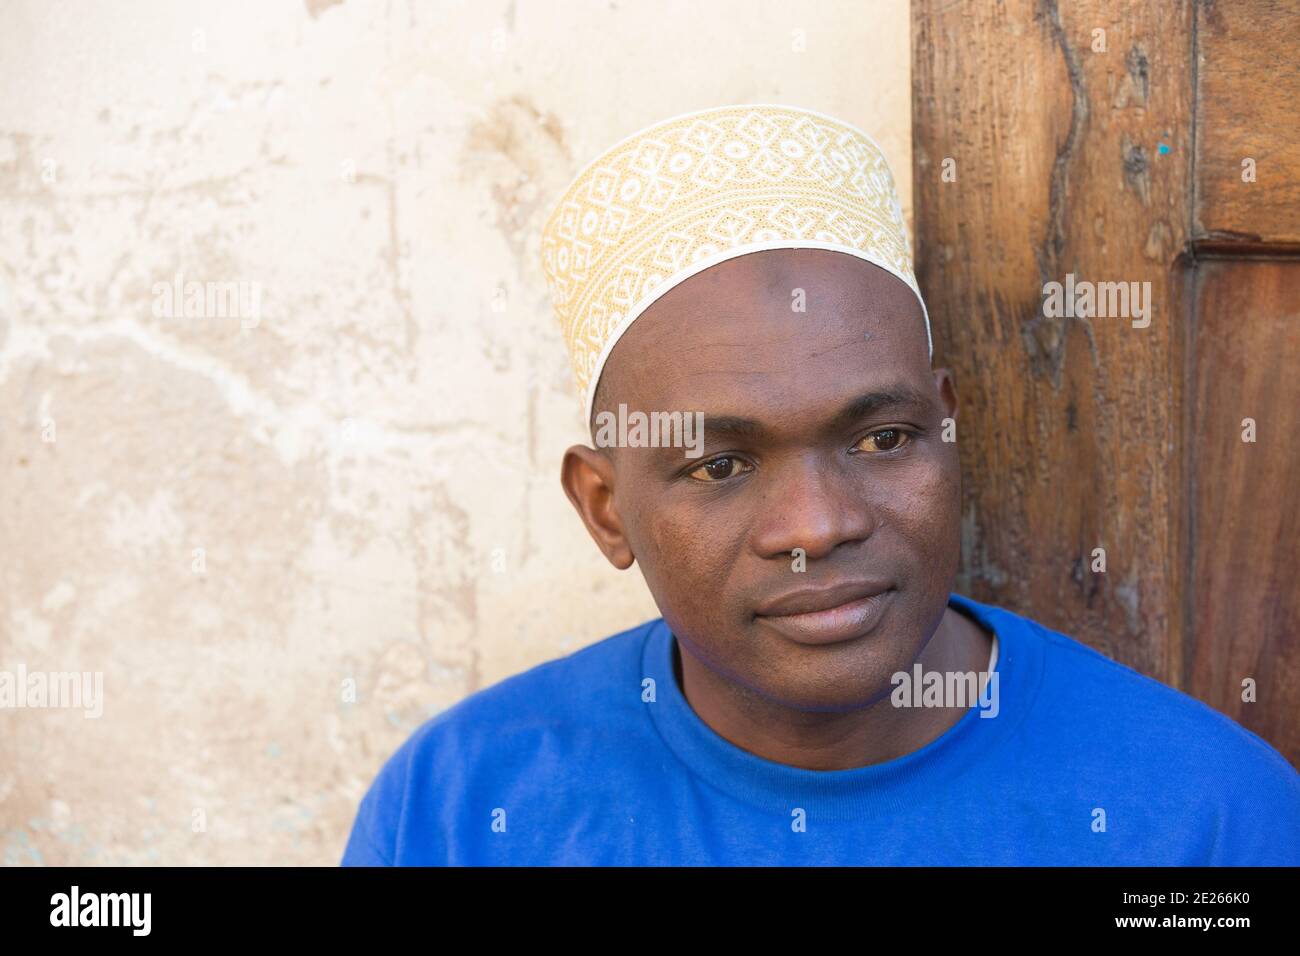 Stone Town, Zanzibar, Tanzania : Portrait of Man Wearing Kofia hat. Stock Photo